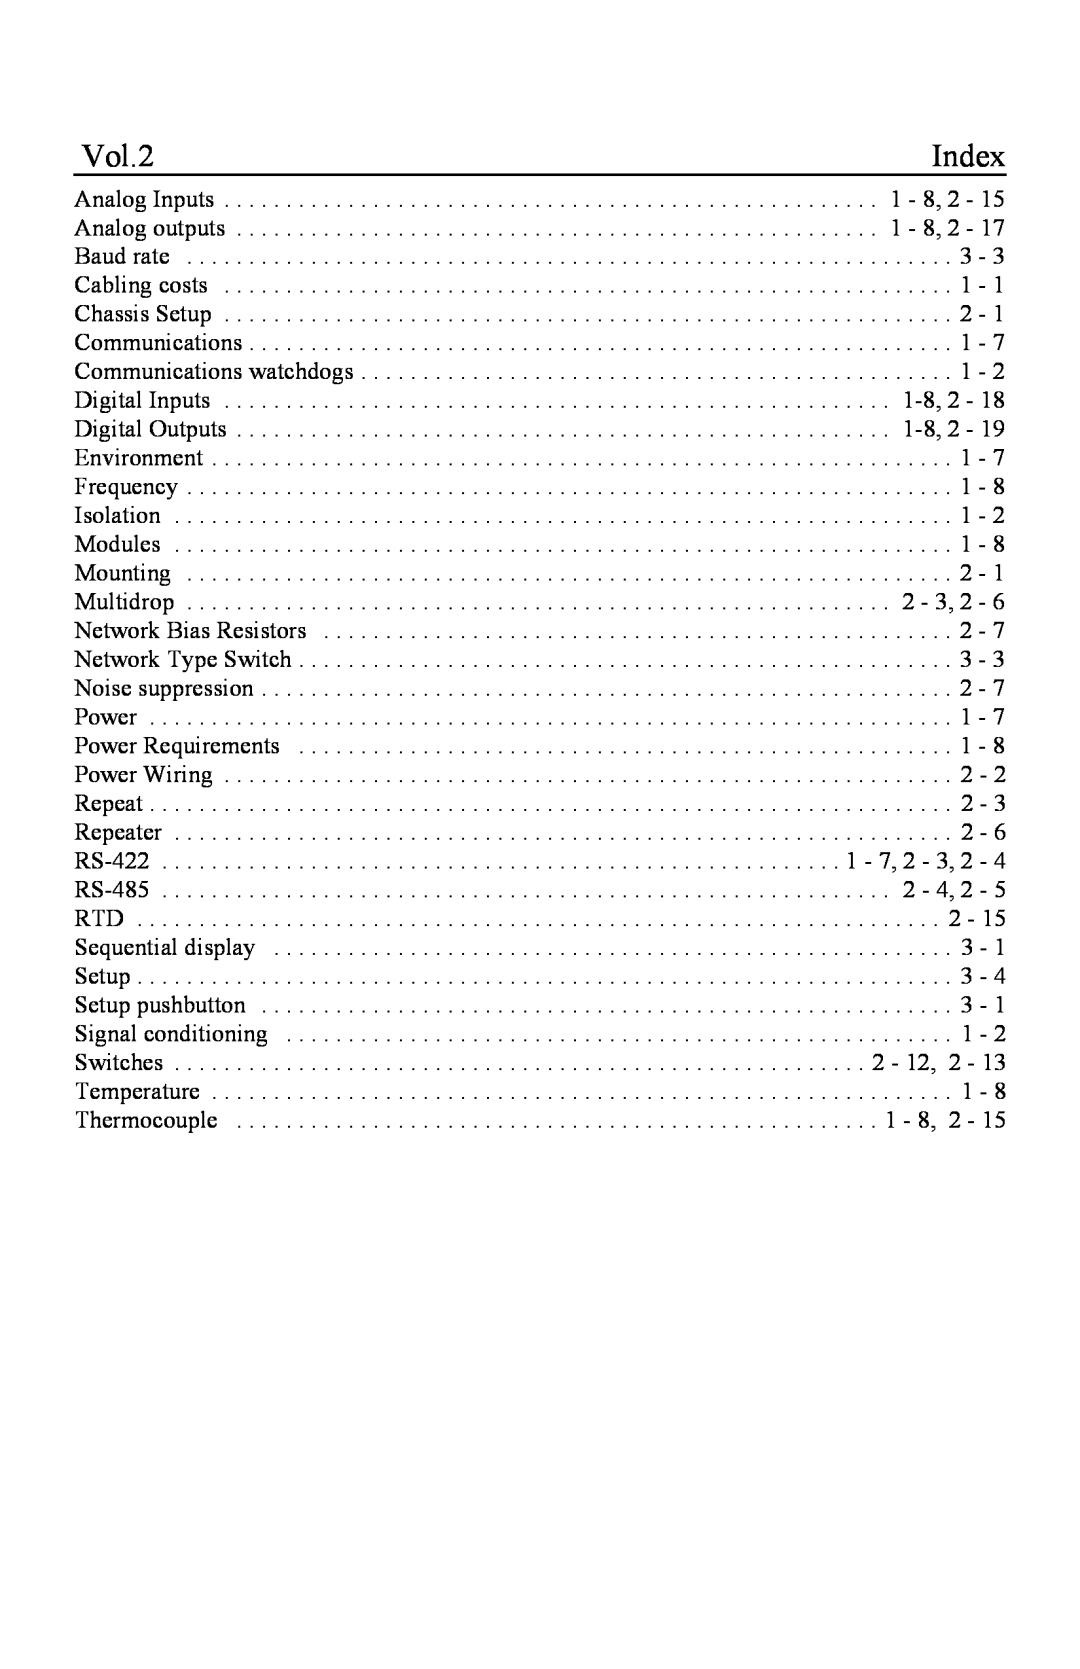 I-O Display Systems Basic I/O Product manual Vol.2, Index 